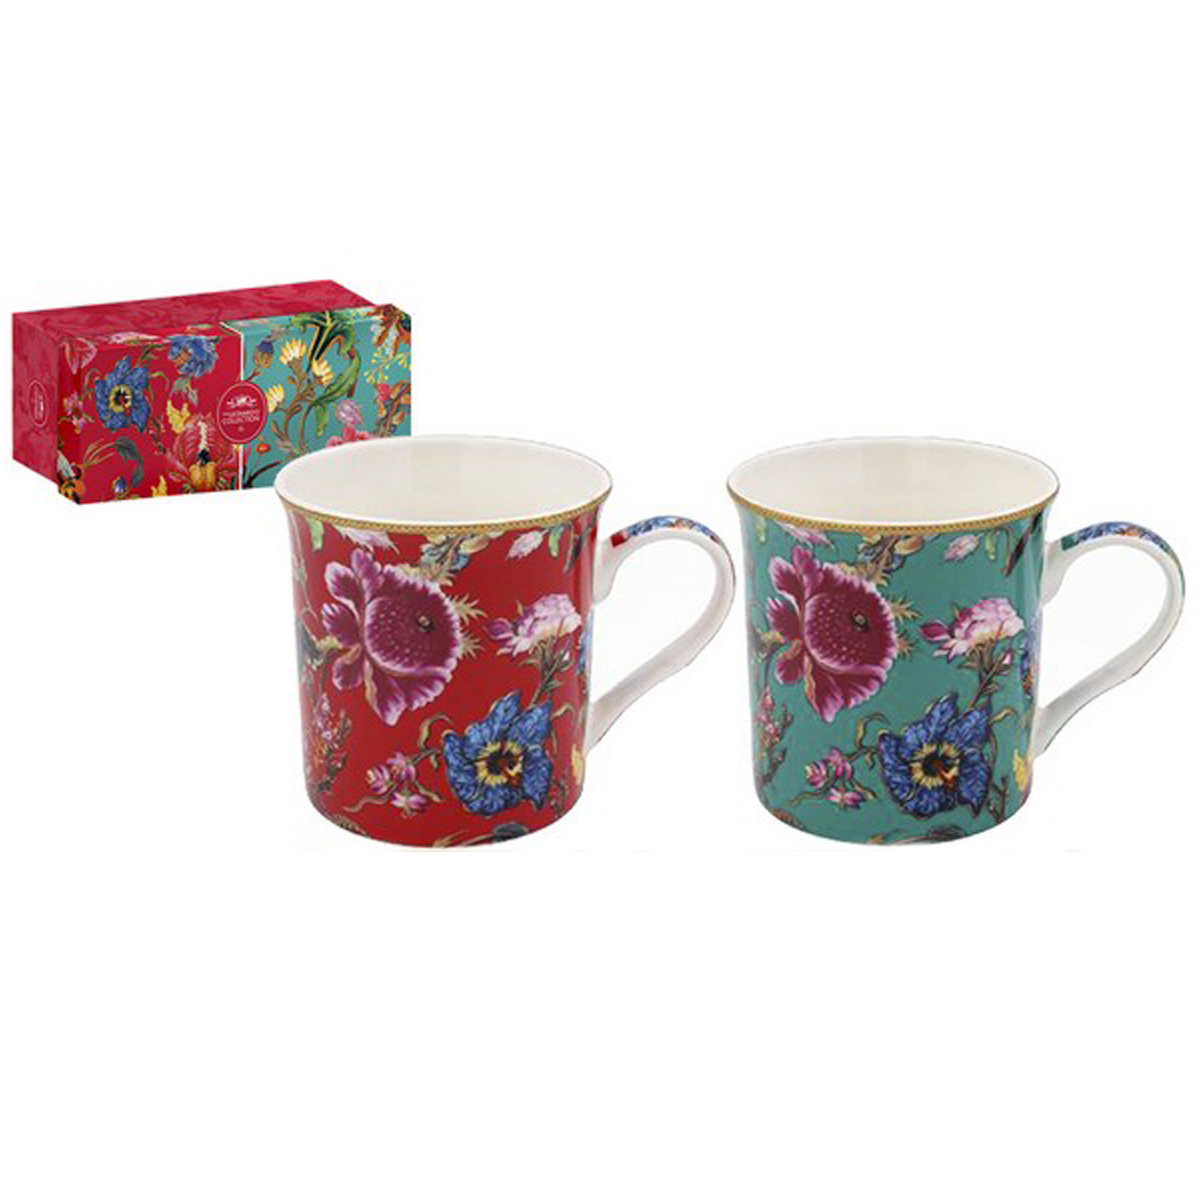 Coffret cadeau porcelaine \'William Morris Collection\' rose turquoise (2 mugs) - 85x85 mm (Anthina) - [A2957]